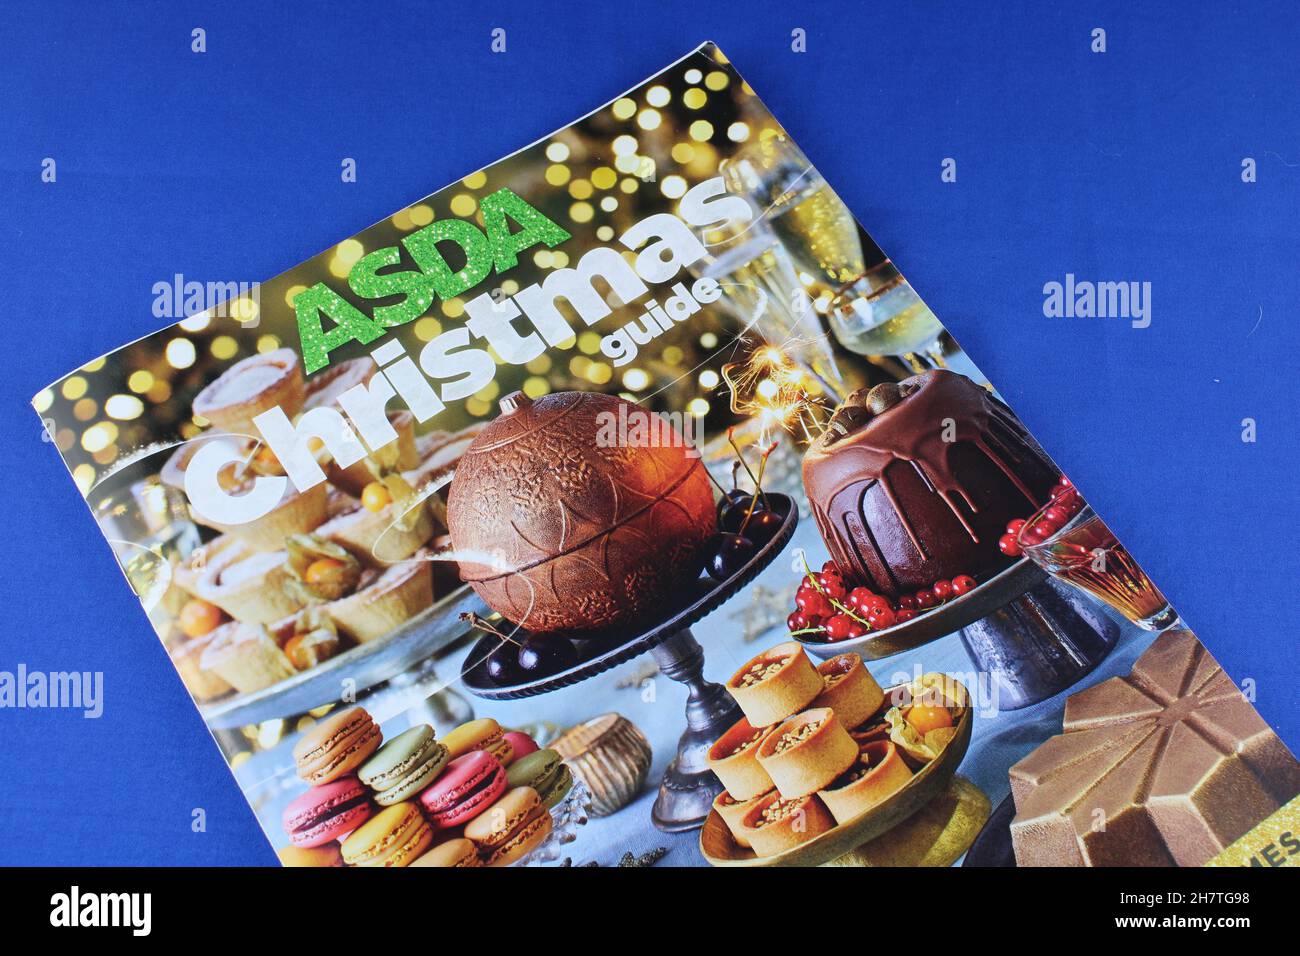 Asda Christmas food guide, Asda Christmas catalogue isolated on a blue background. Asda instore Christmas food guide magazine Stock Photo